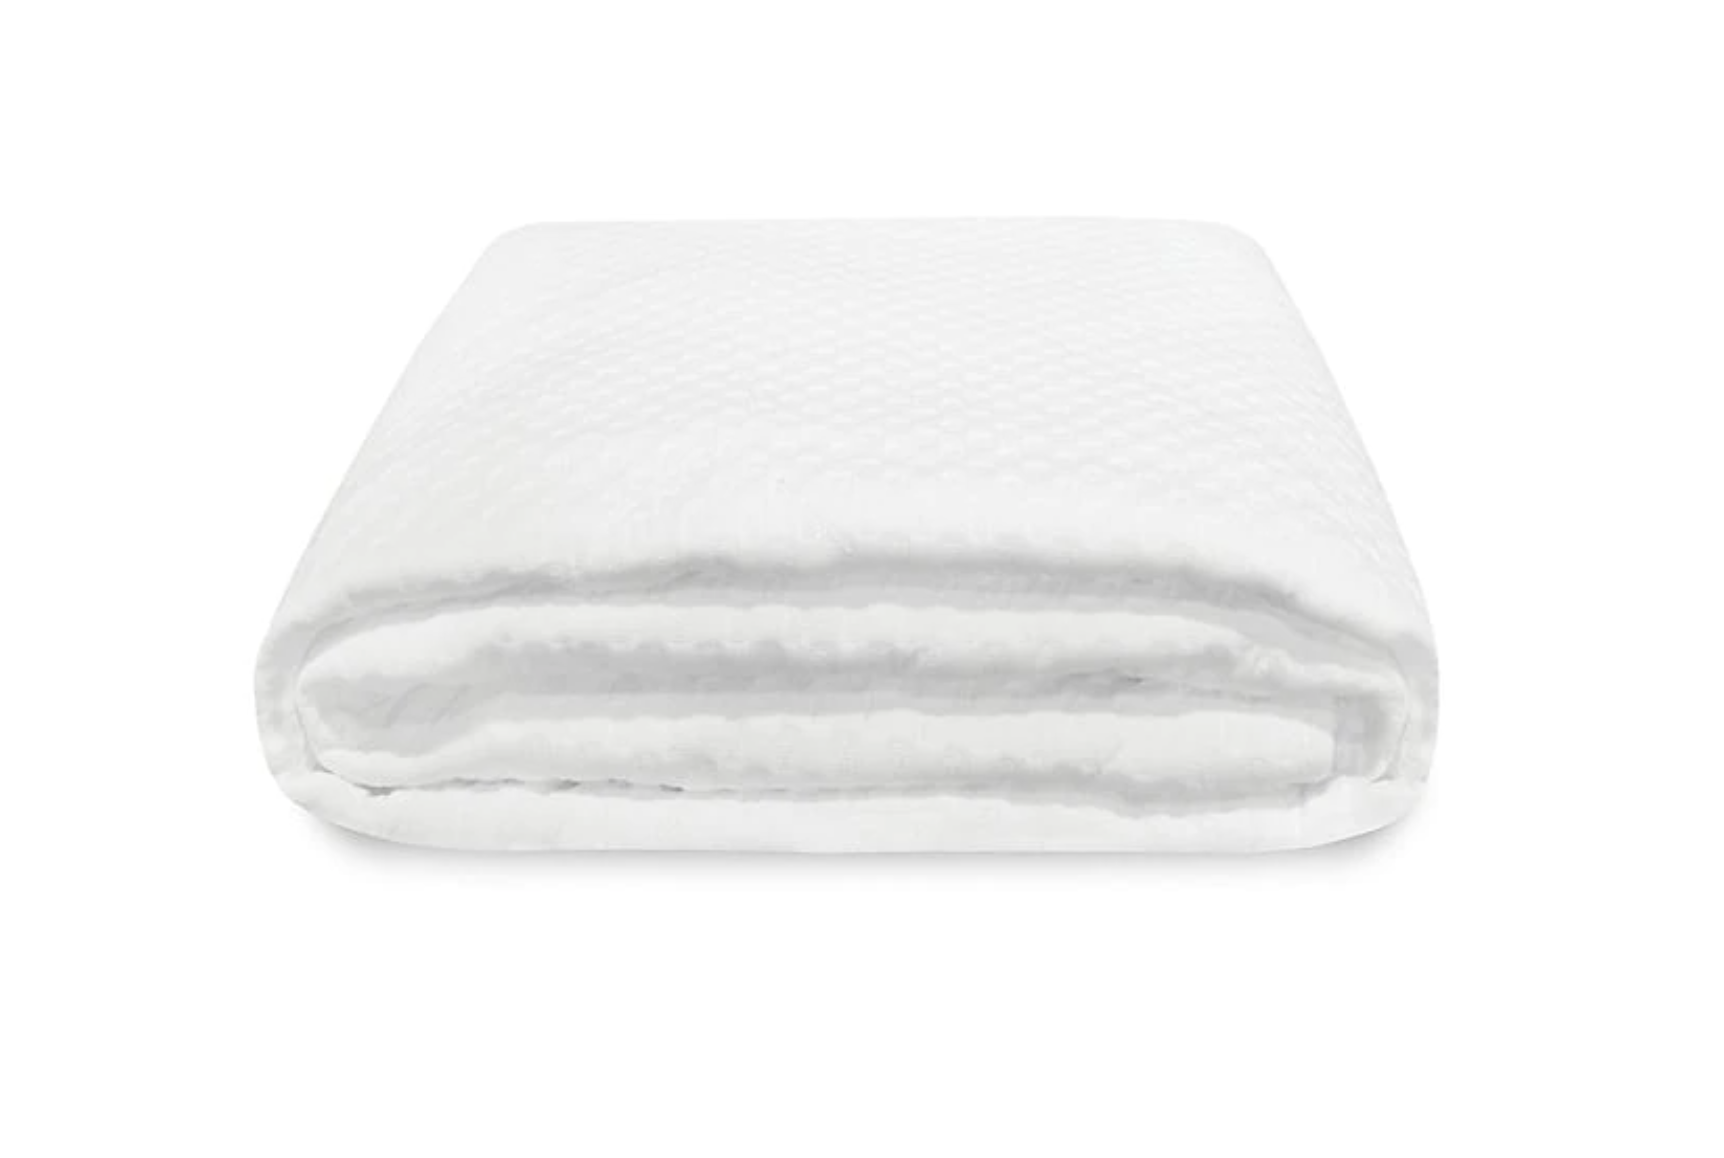 therapedic polar nights mattress pad reviews